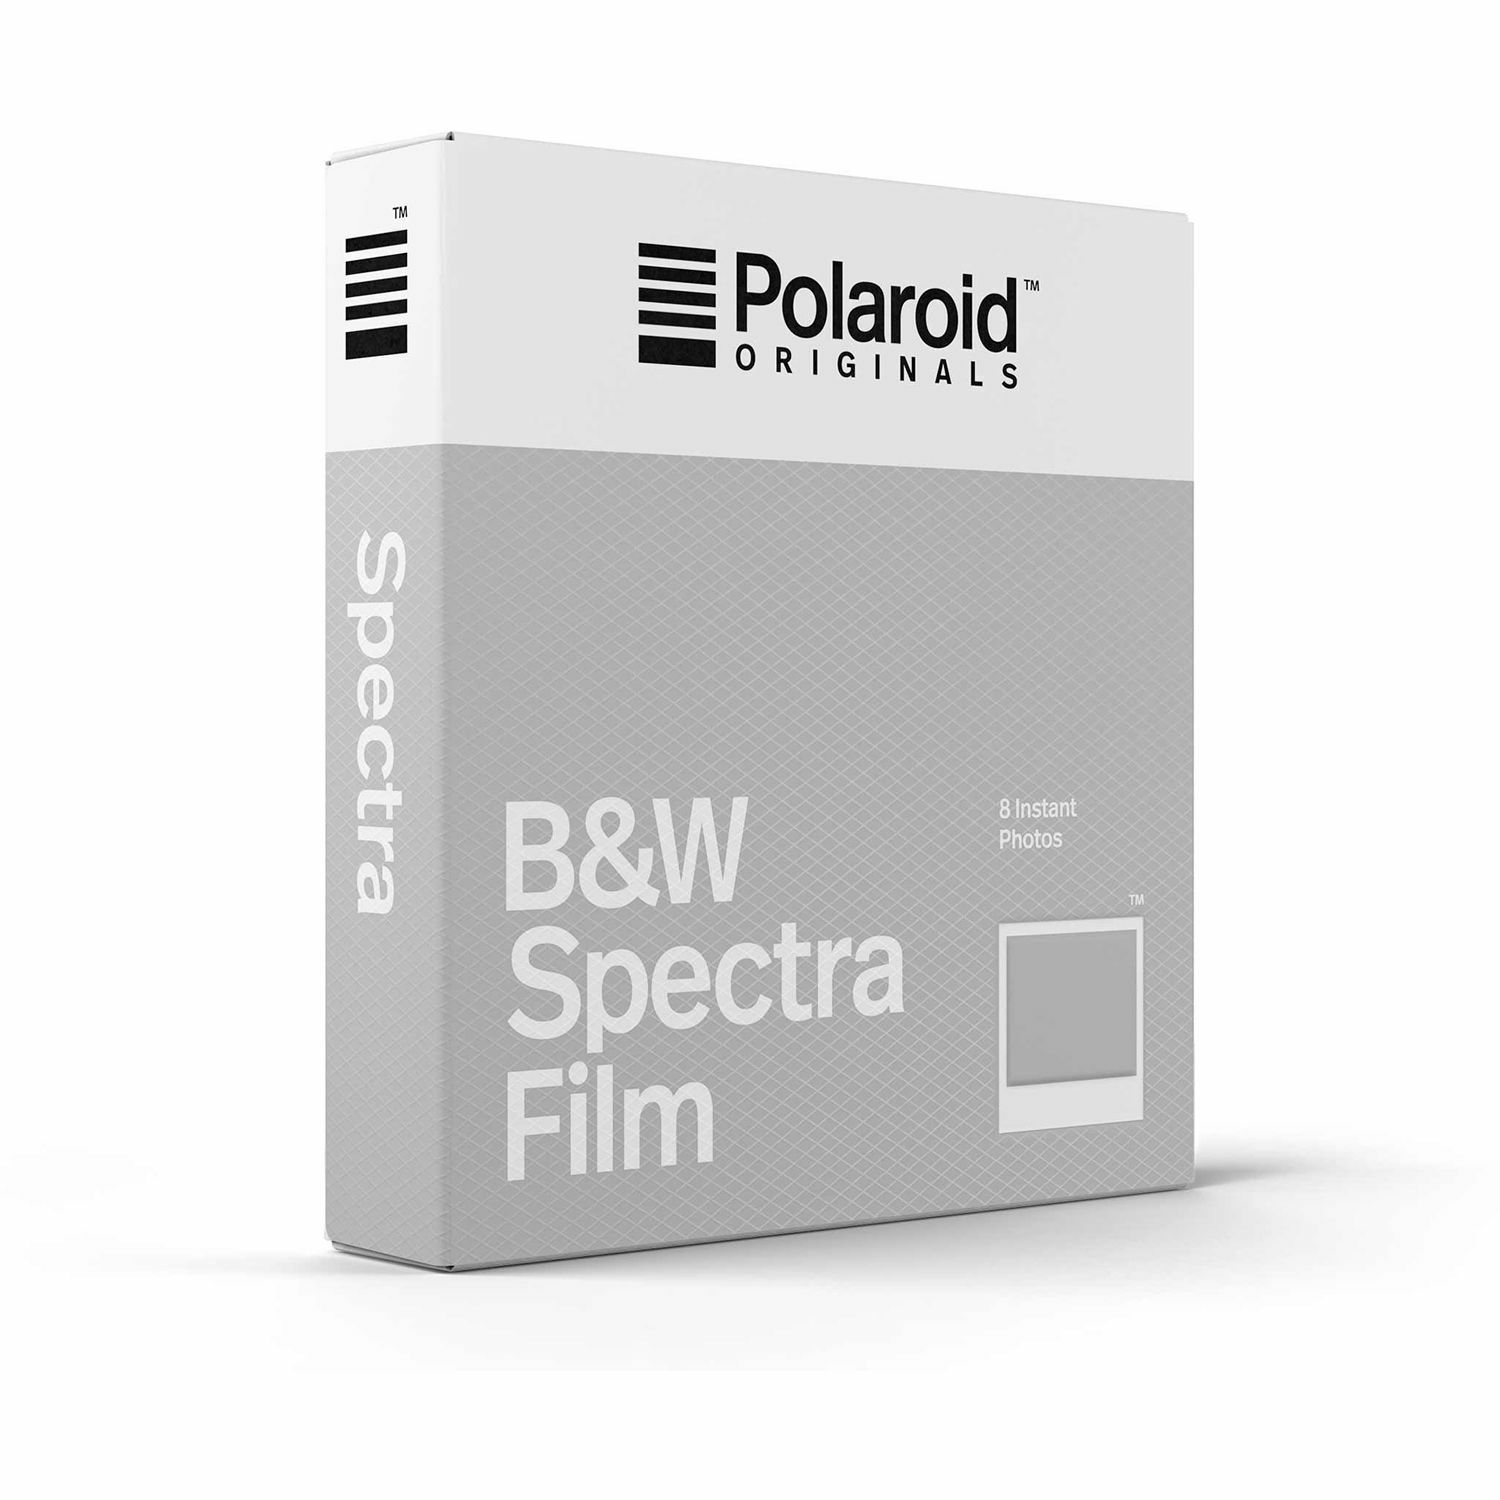 Polaroid Originals B&W film for Image i Spectra Cameras papir za crno-bijele fotografije za Instant fotoaparate (004679)